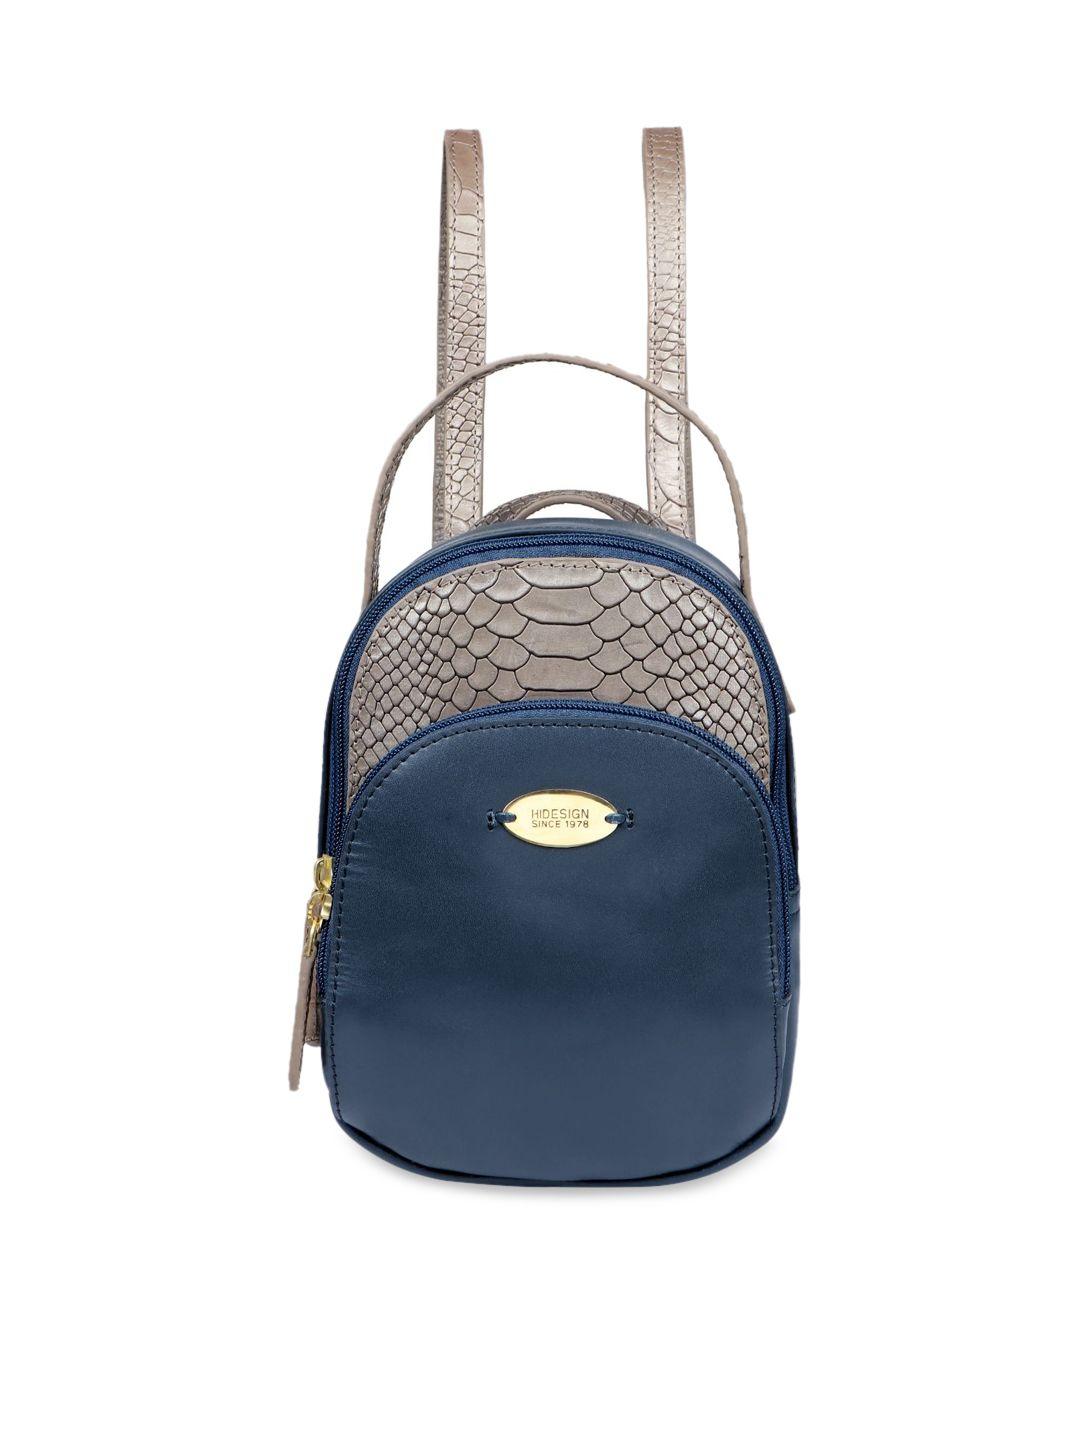 hidesign women blue & grey colourblocked animal printed backpack